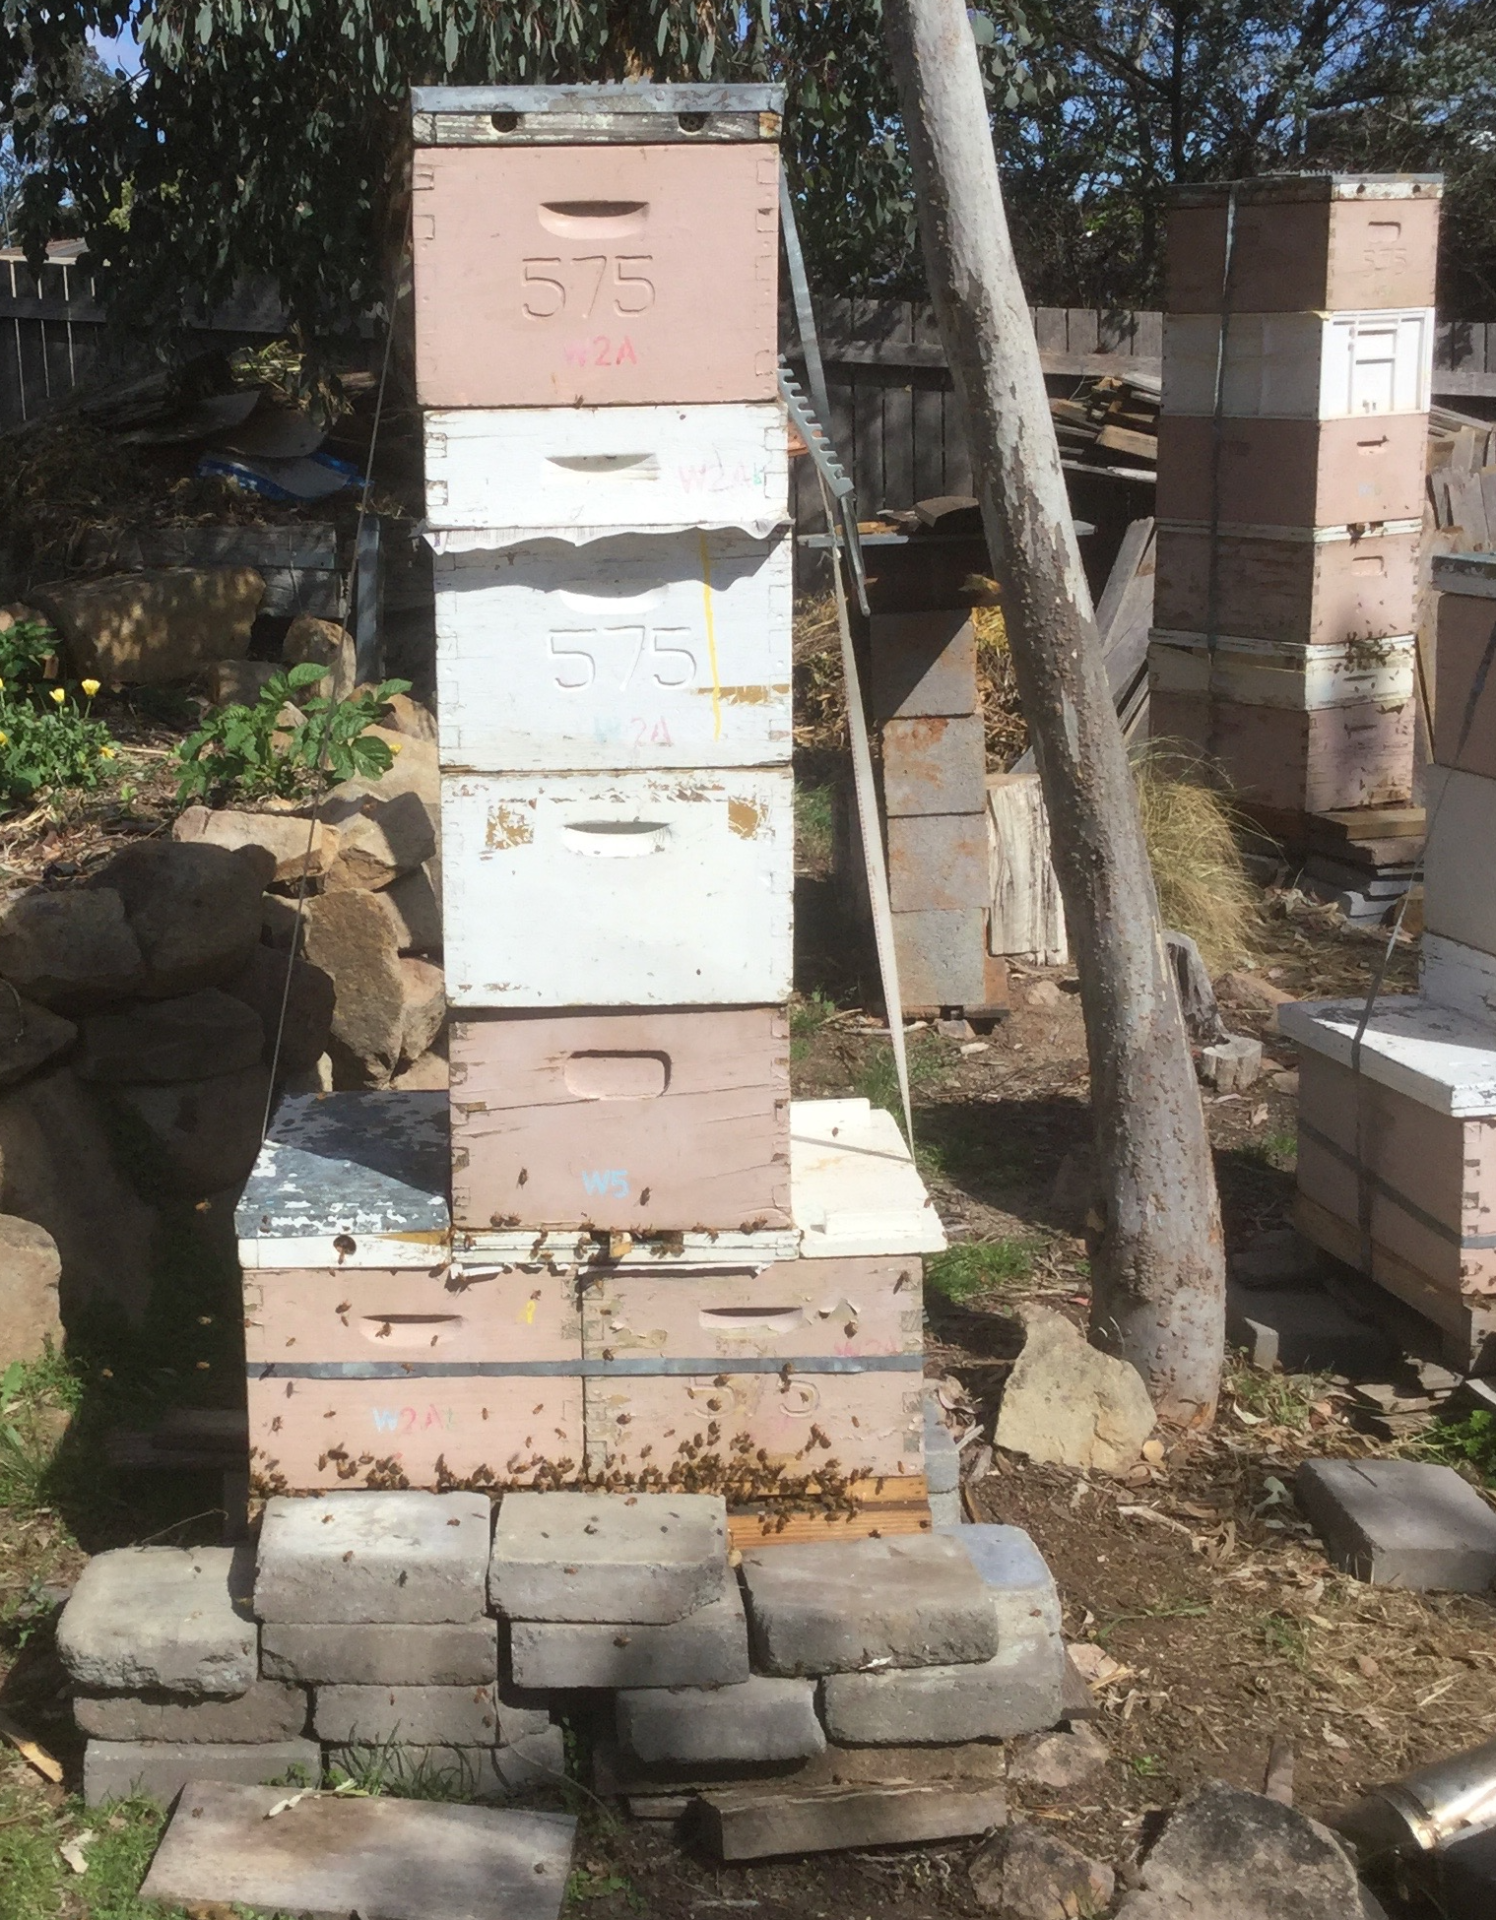 Multile queen hives